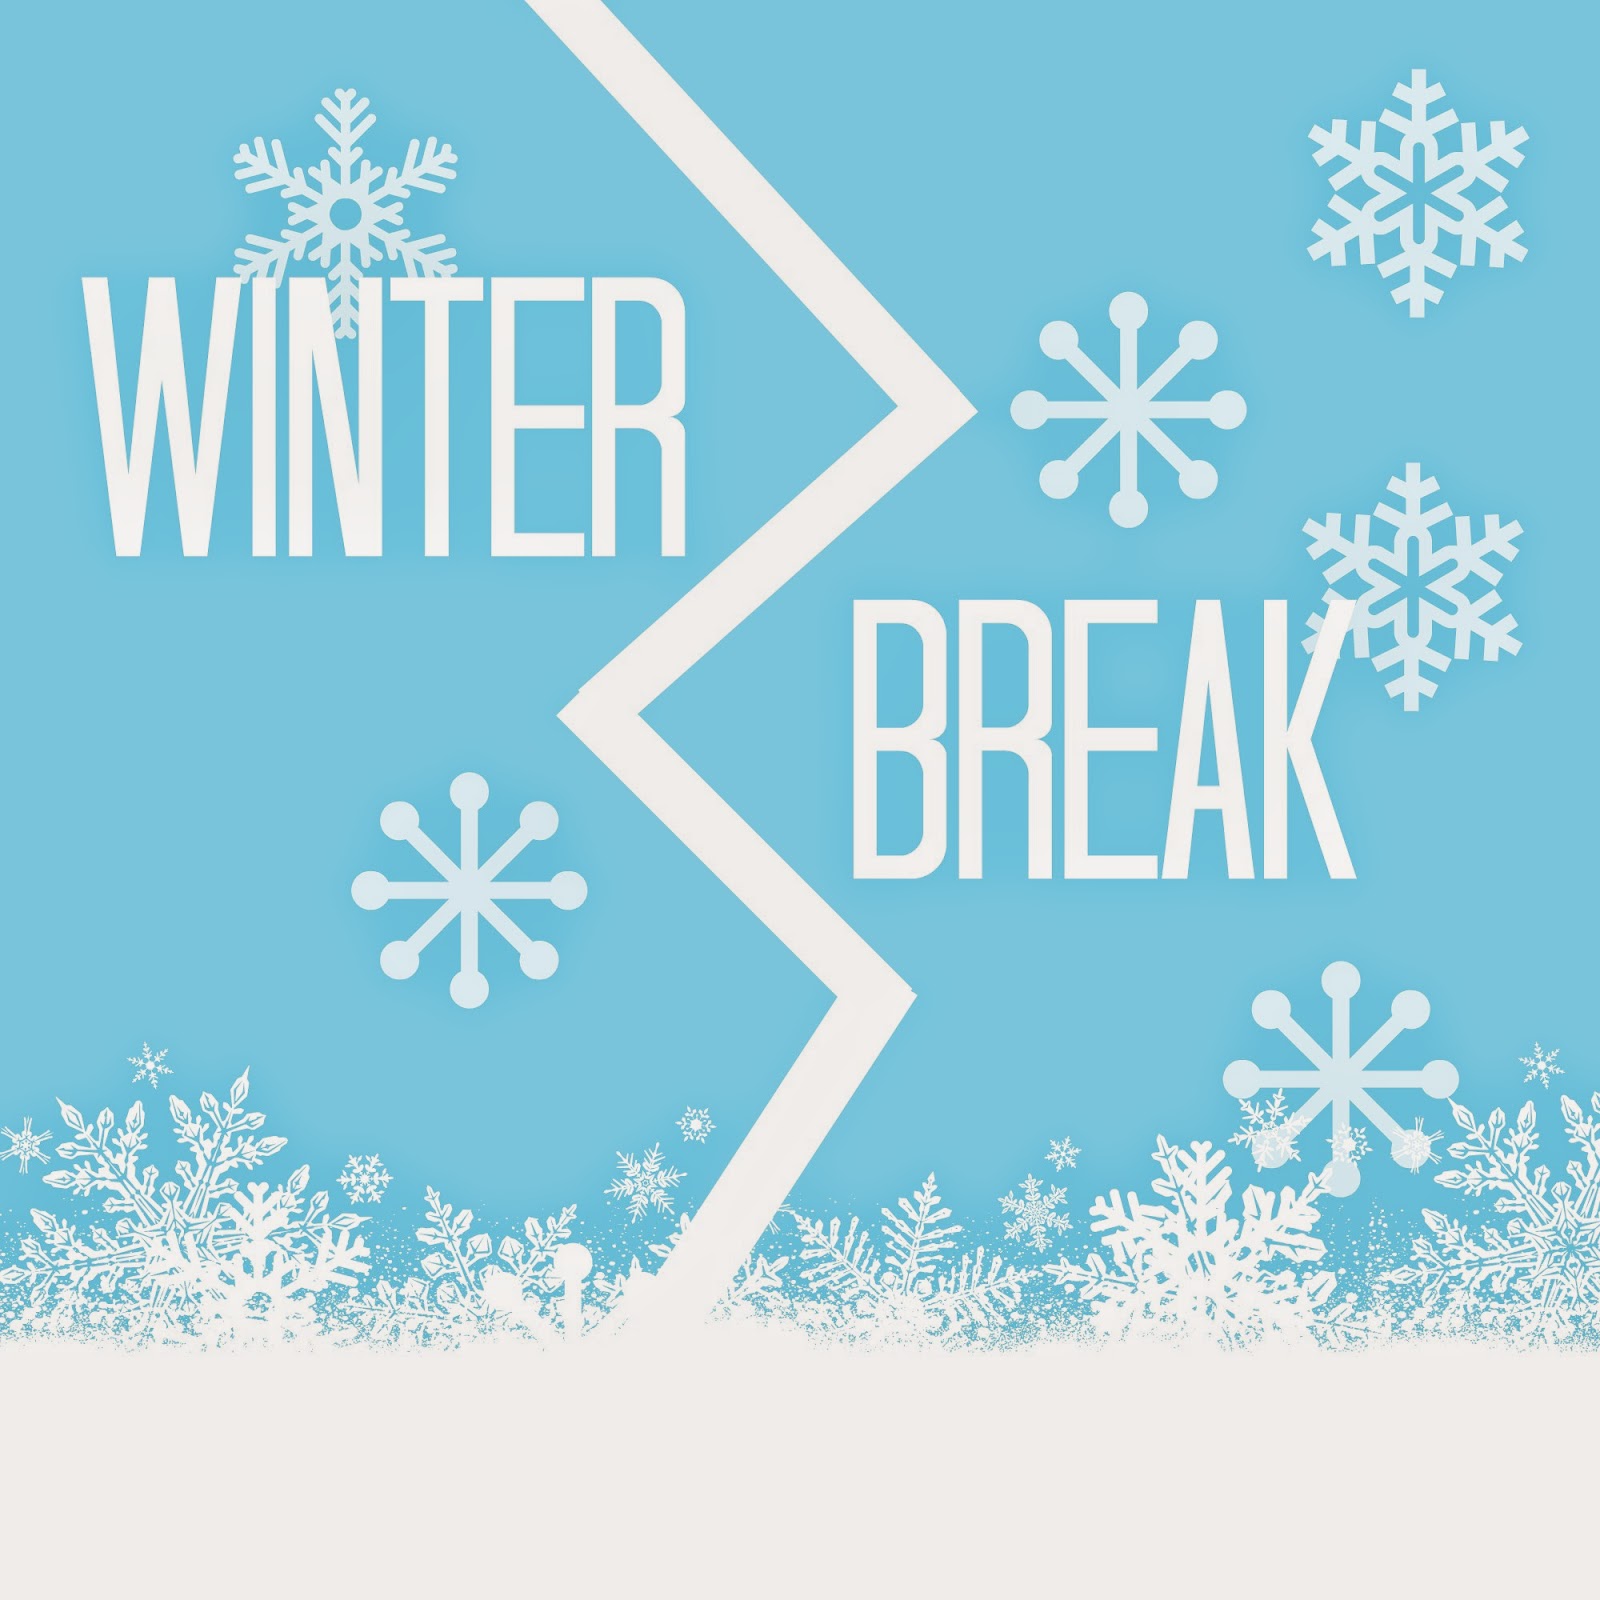 Happy Winter Break! – Life-Health Sciences Internship Program at IUPUI